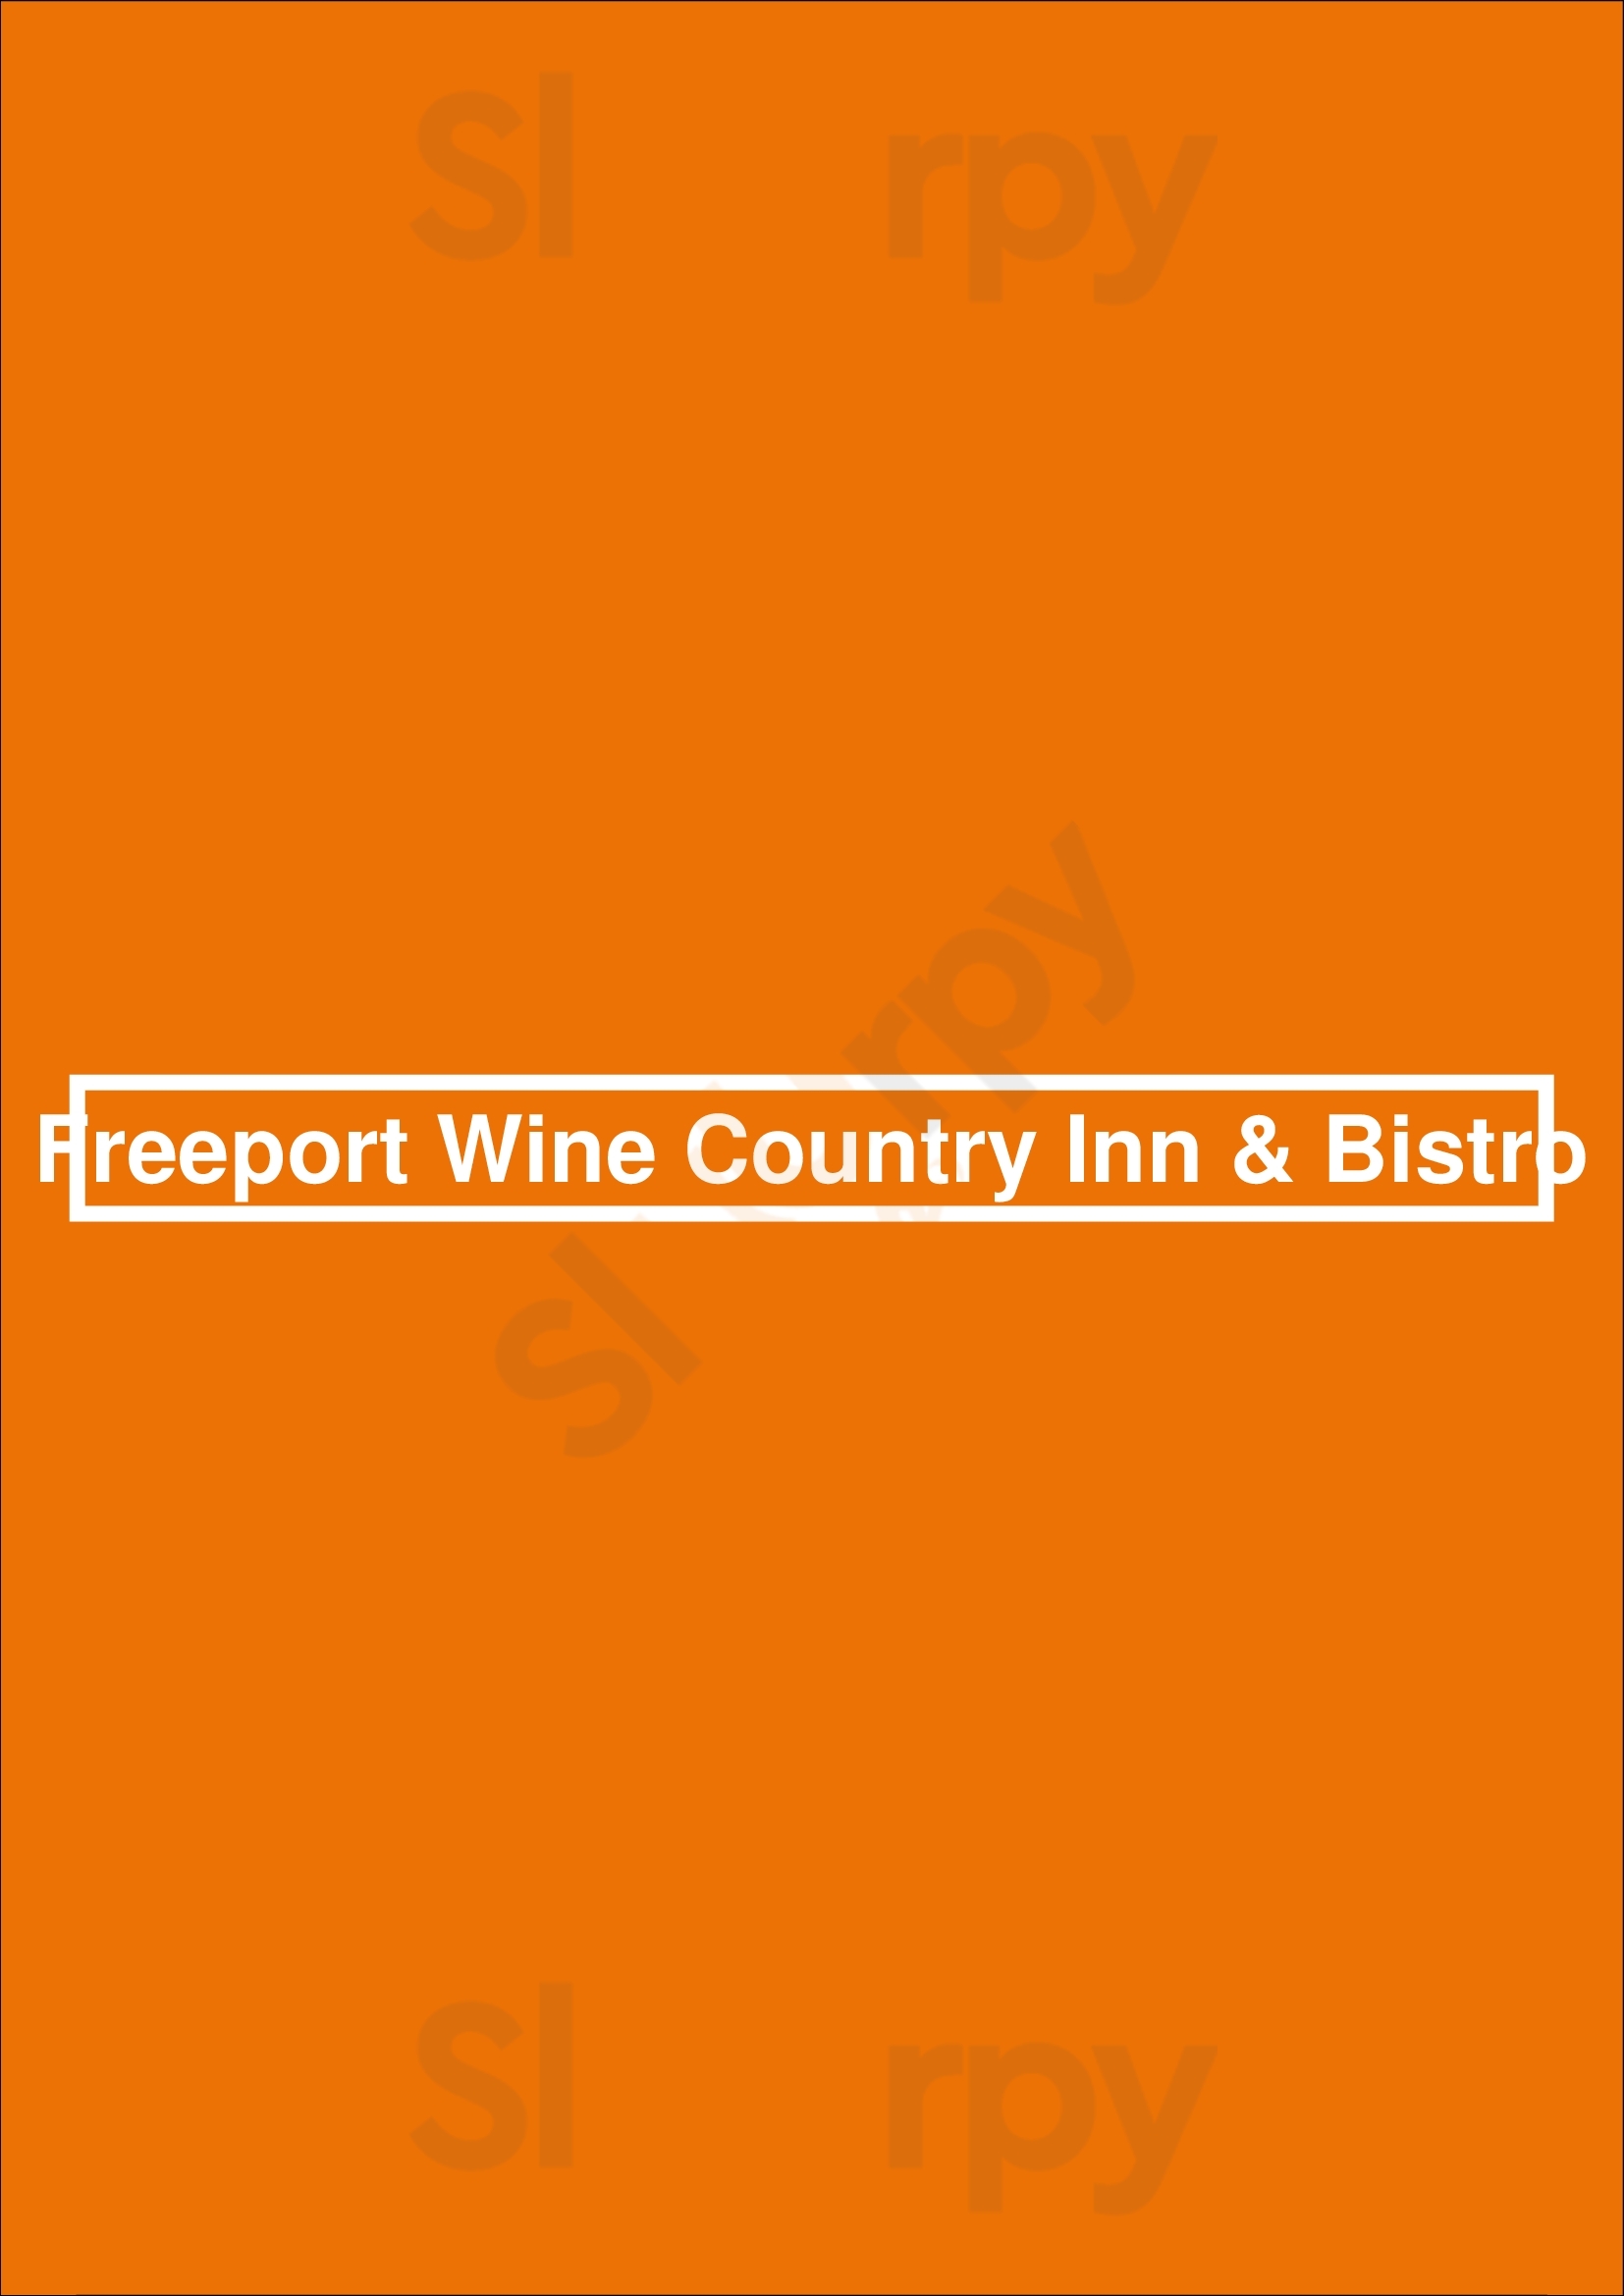 Freeport Wine Country Inn & Bistro Sacramento Menu - 1